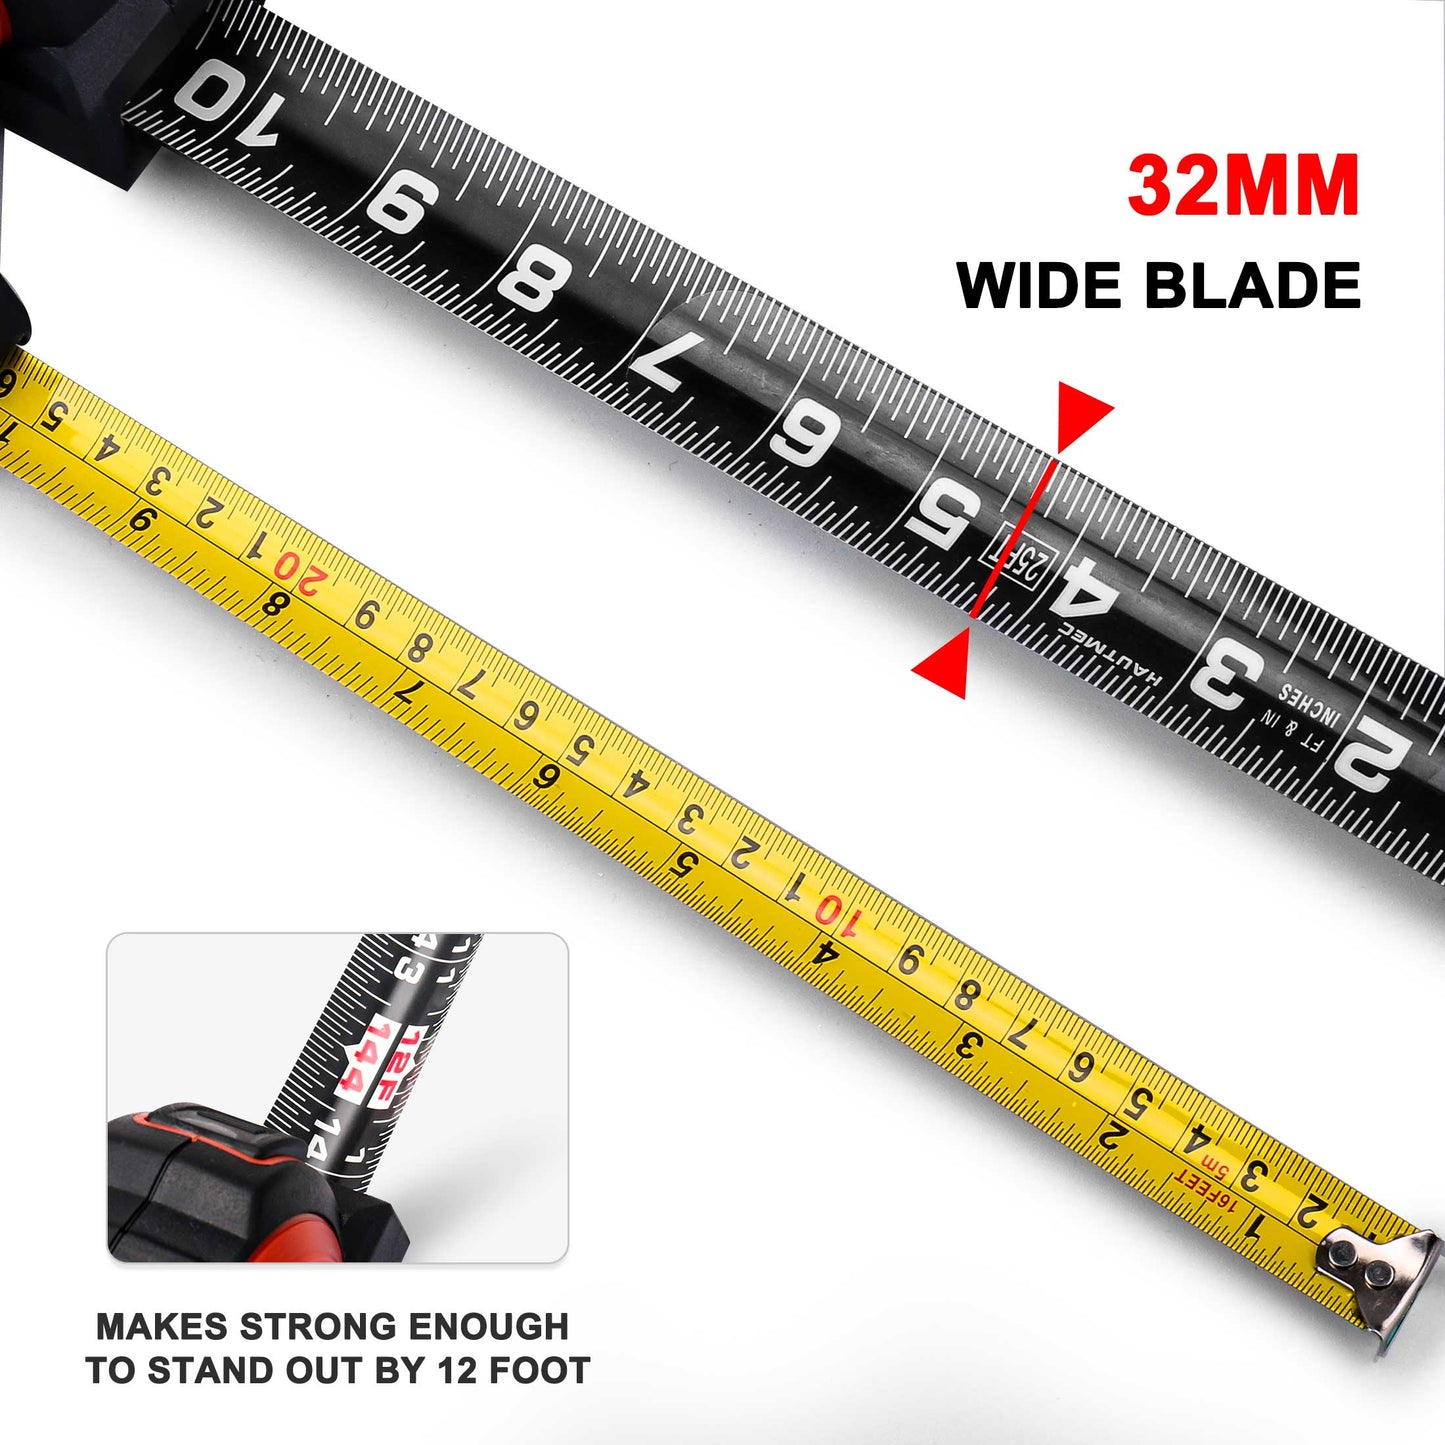 HAUTMEC 25Ft (7.5m) Heavy Duty AutoLock Black Tape Measure, 1 1/4" Wide Black Rigid Blade, Dual Sided Rule Print for Construction, Carpenter, Professionals HT0283-TM